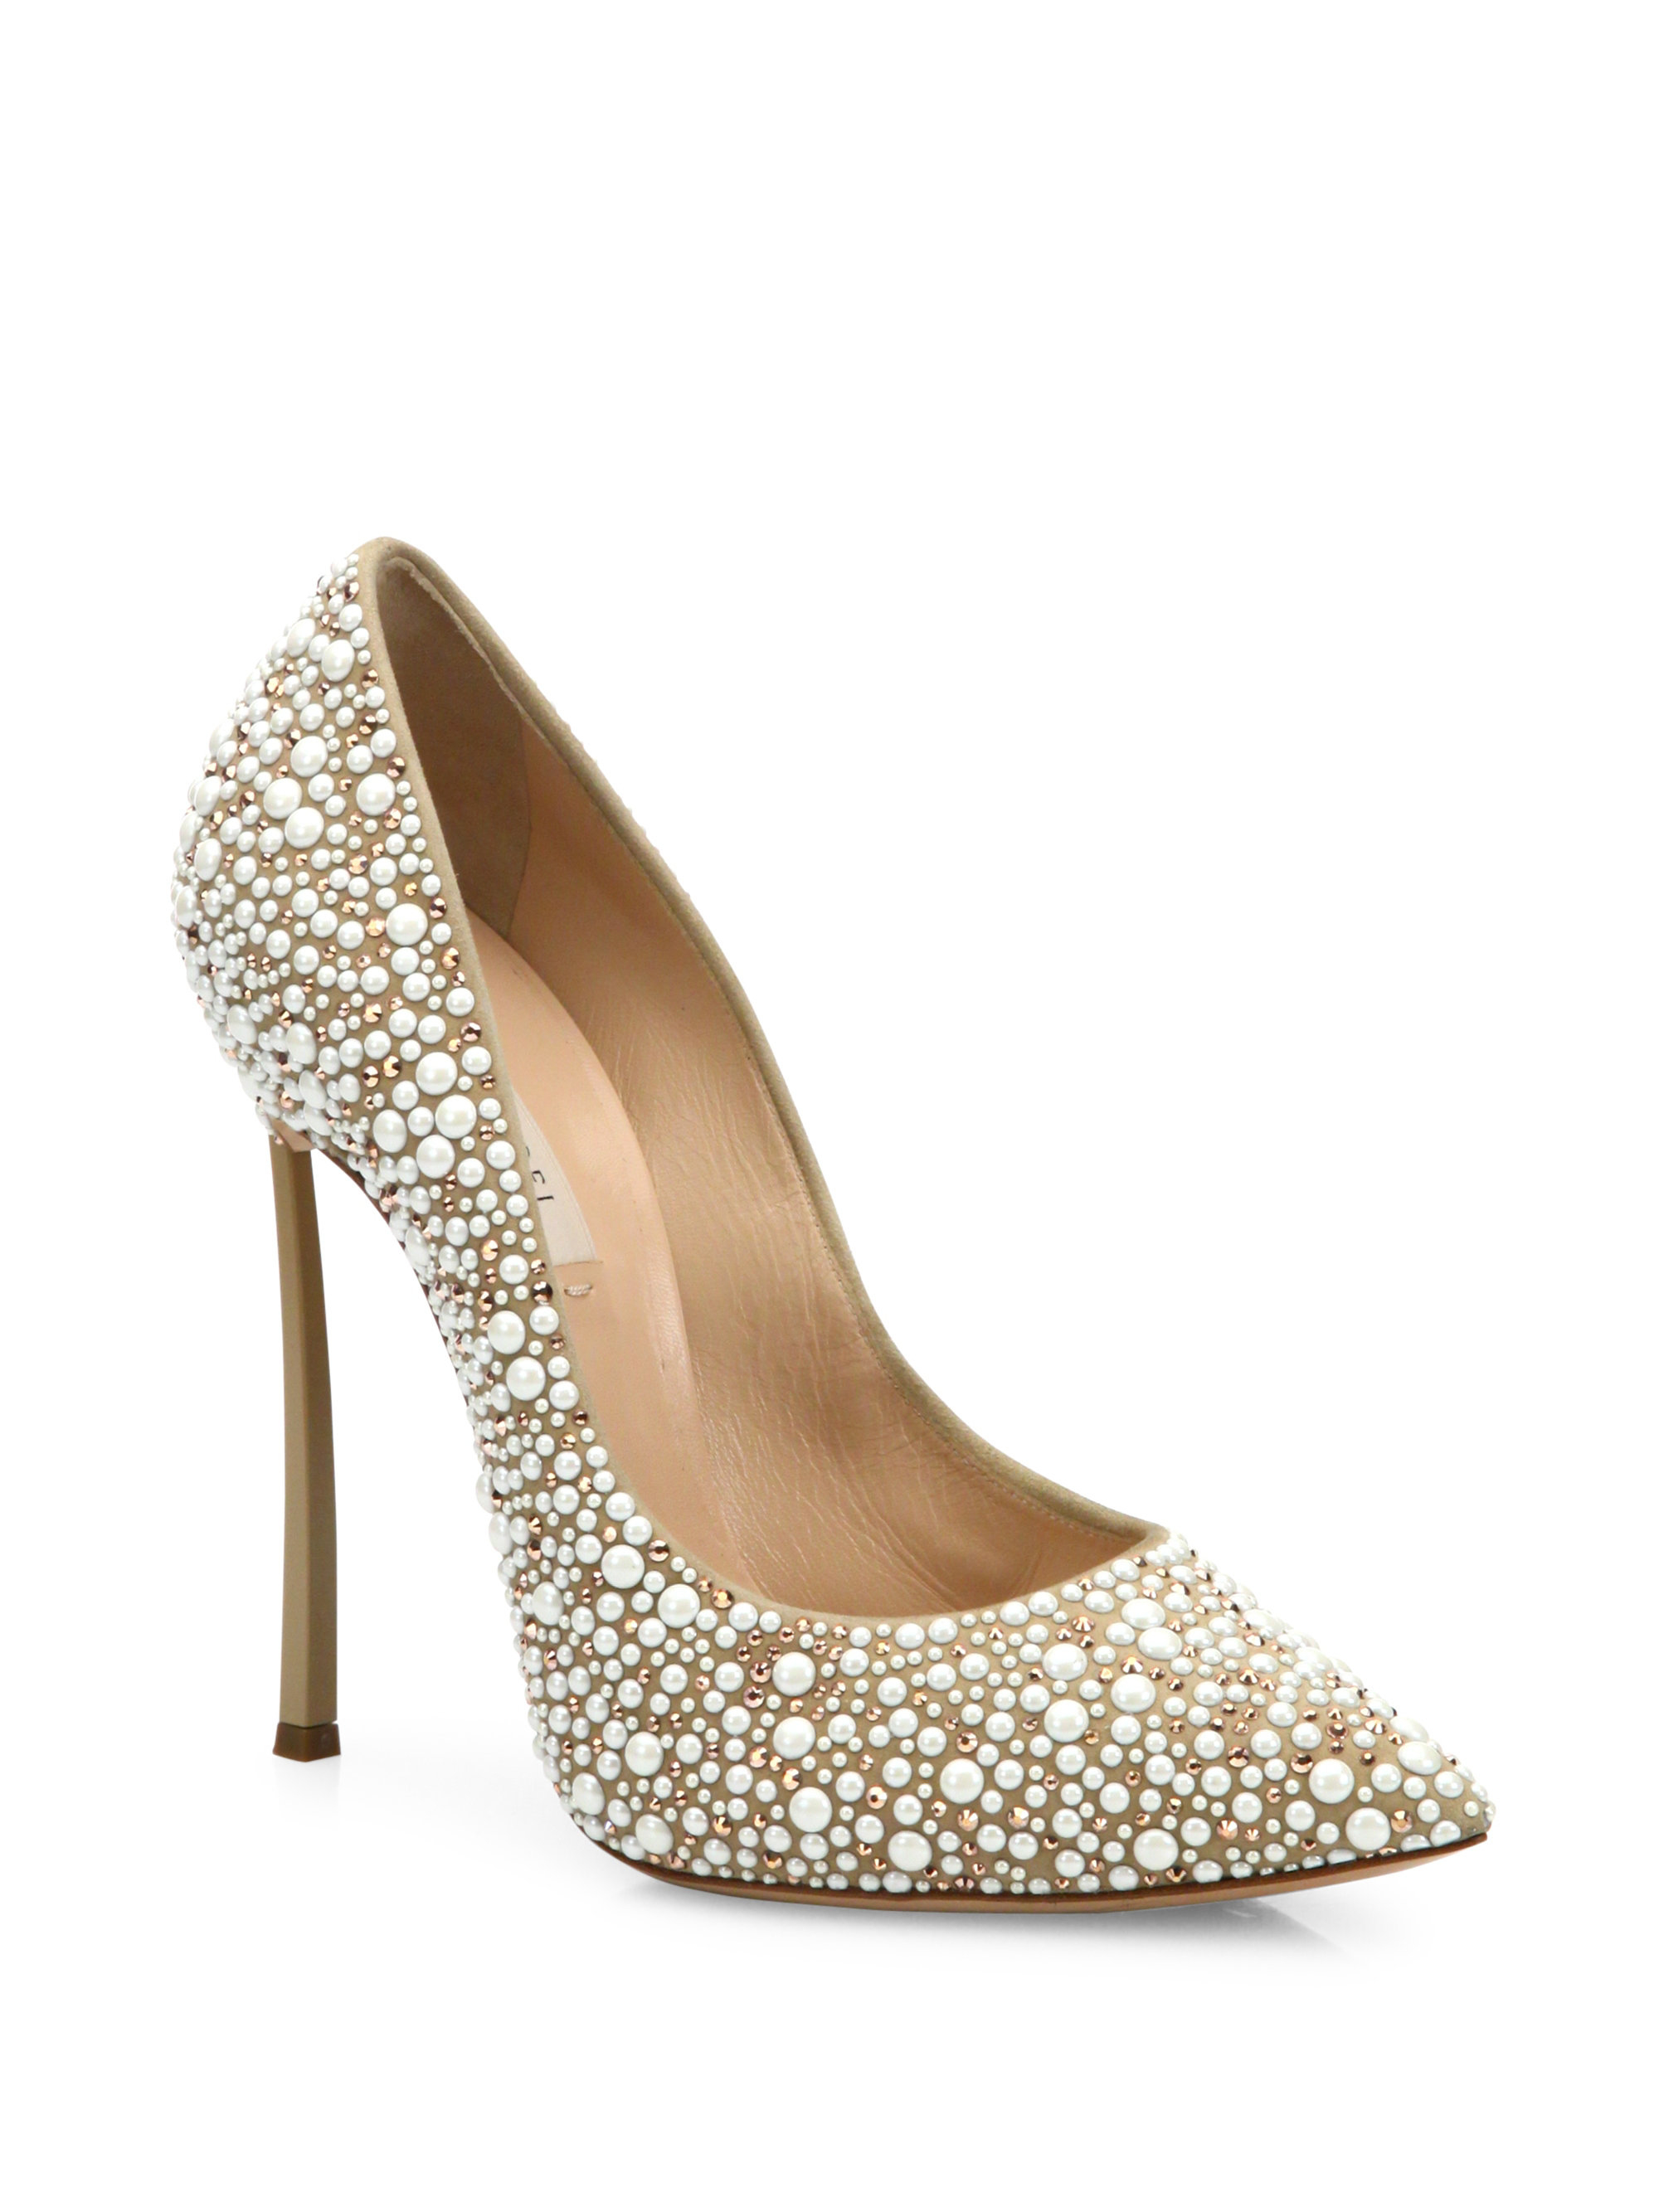 pearl studded heels